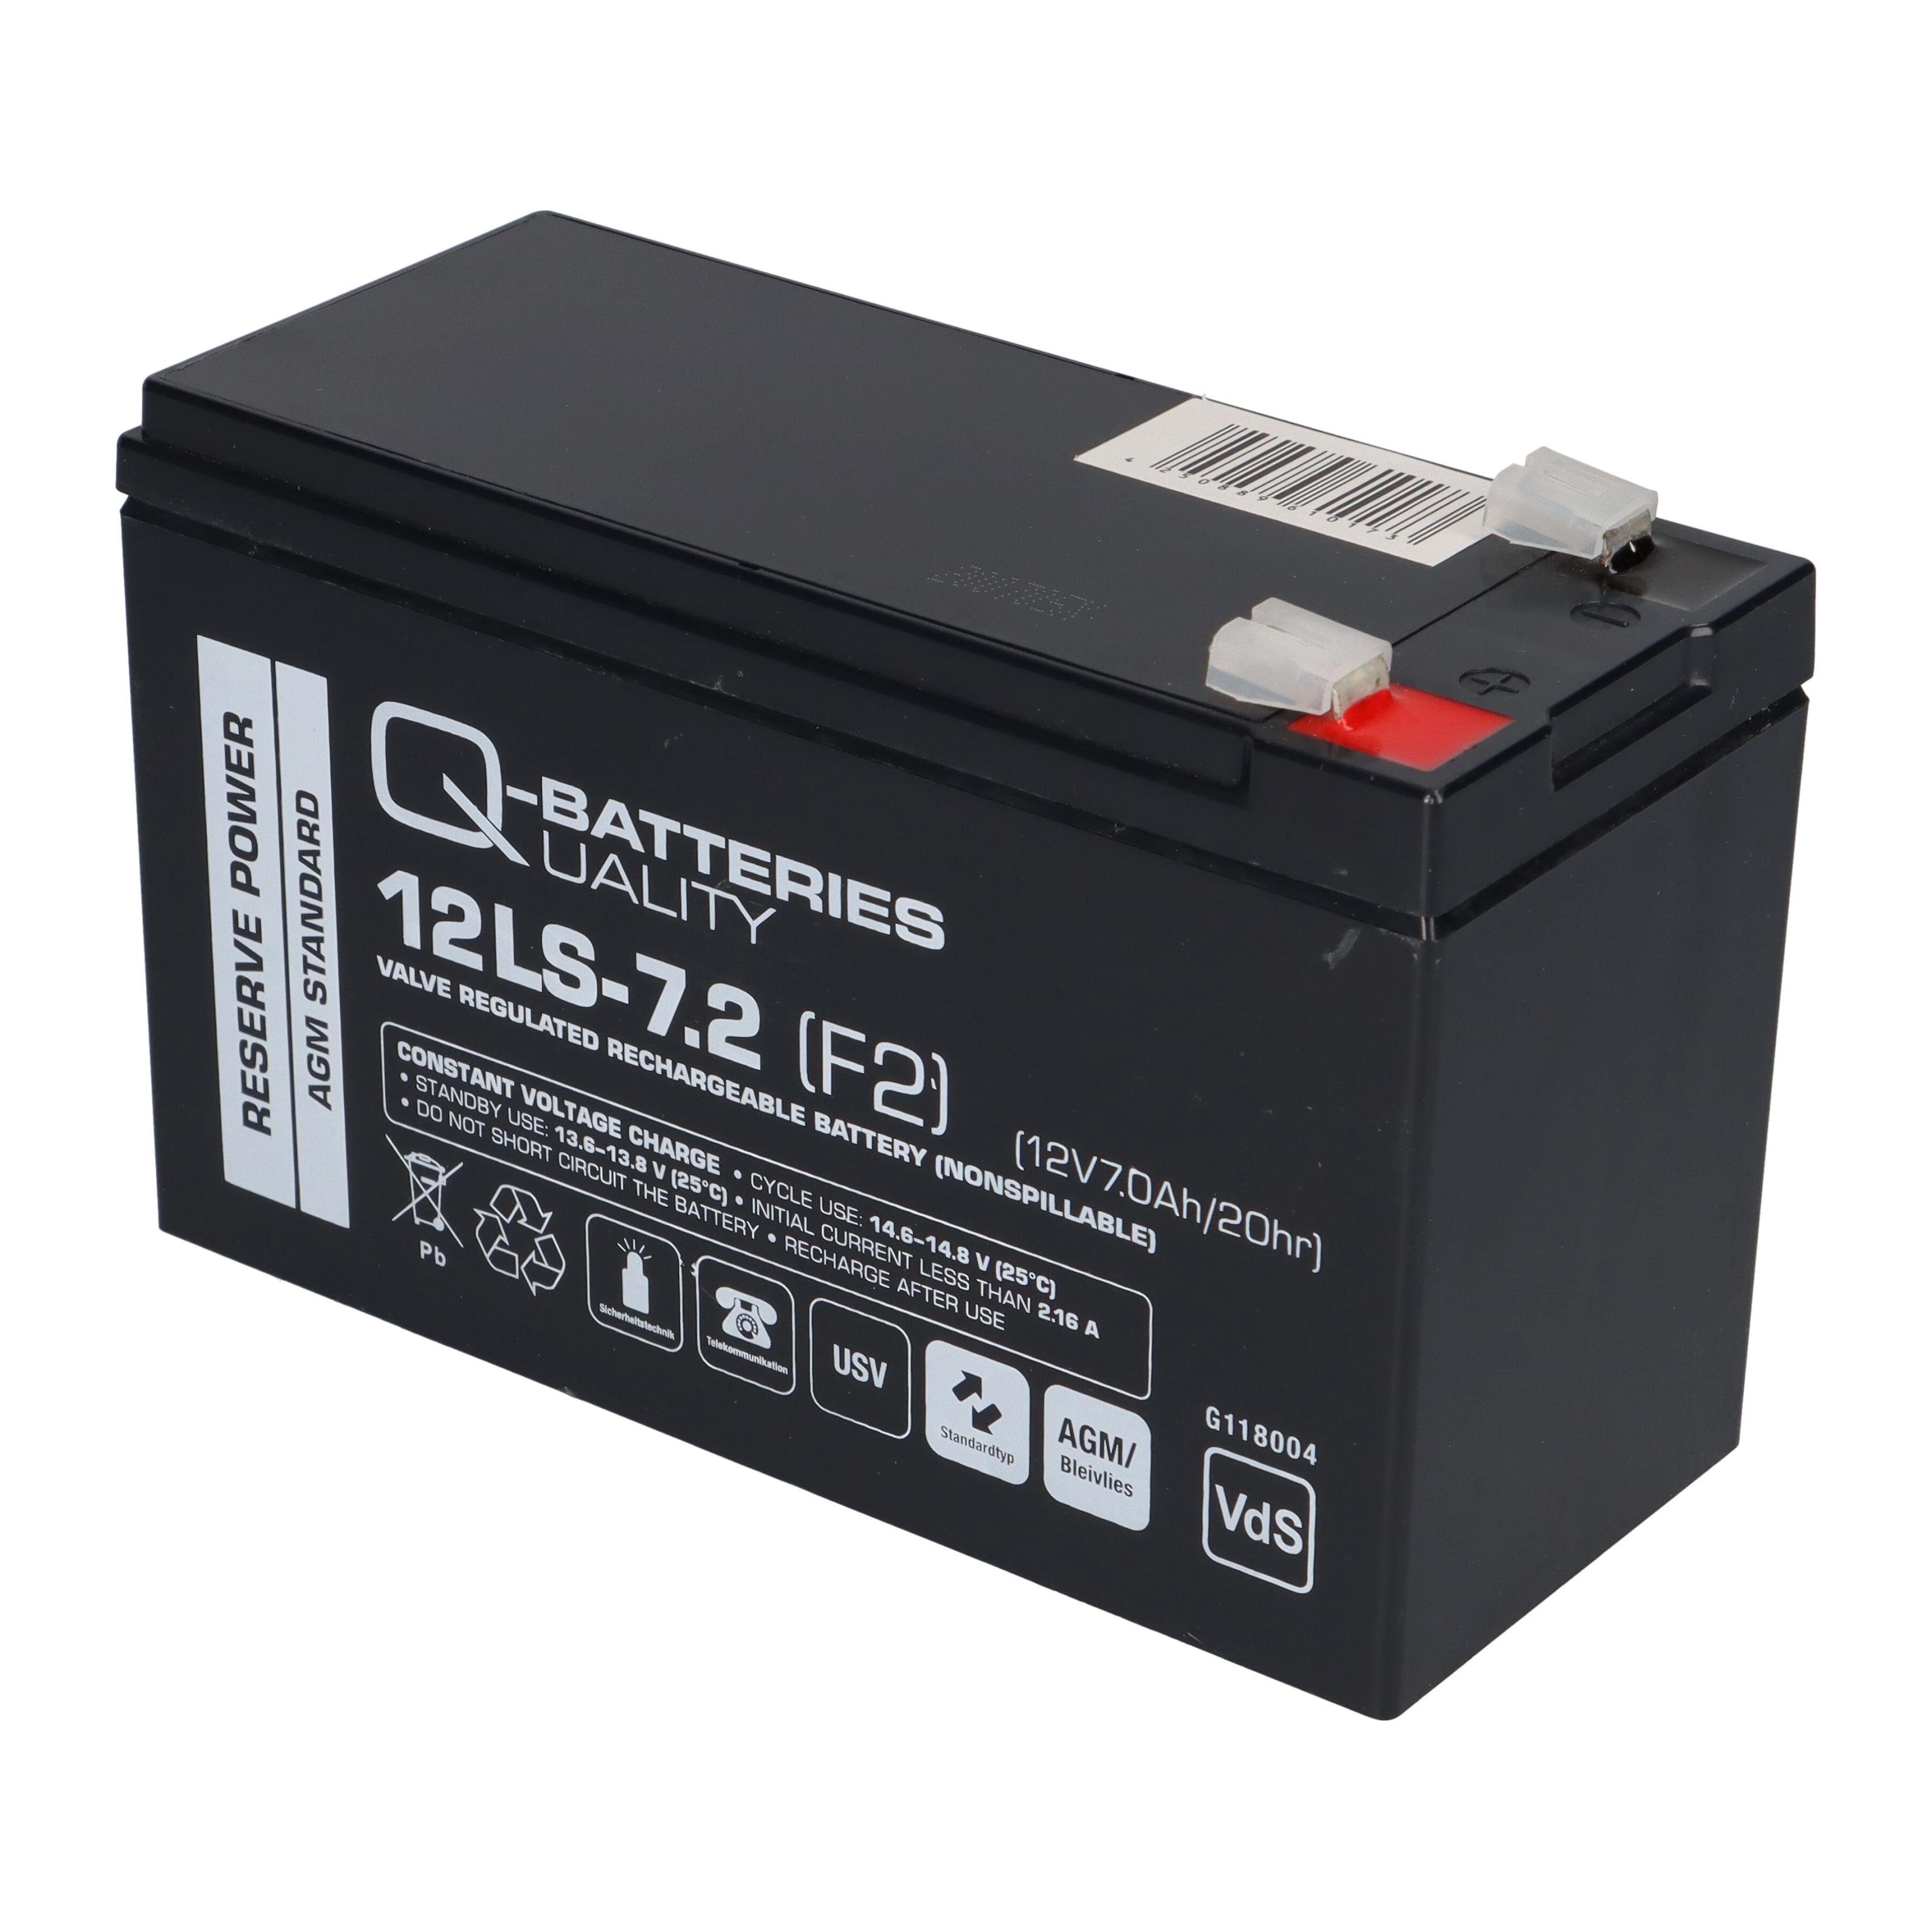 Q-Batteries Q-Batteries 12LS-7.2 F2 VdS 7,2Ah Blei-Vlies-Akku Bleiakkus / 12V VRLA mit AGM